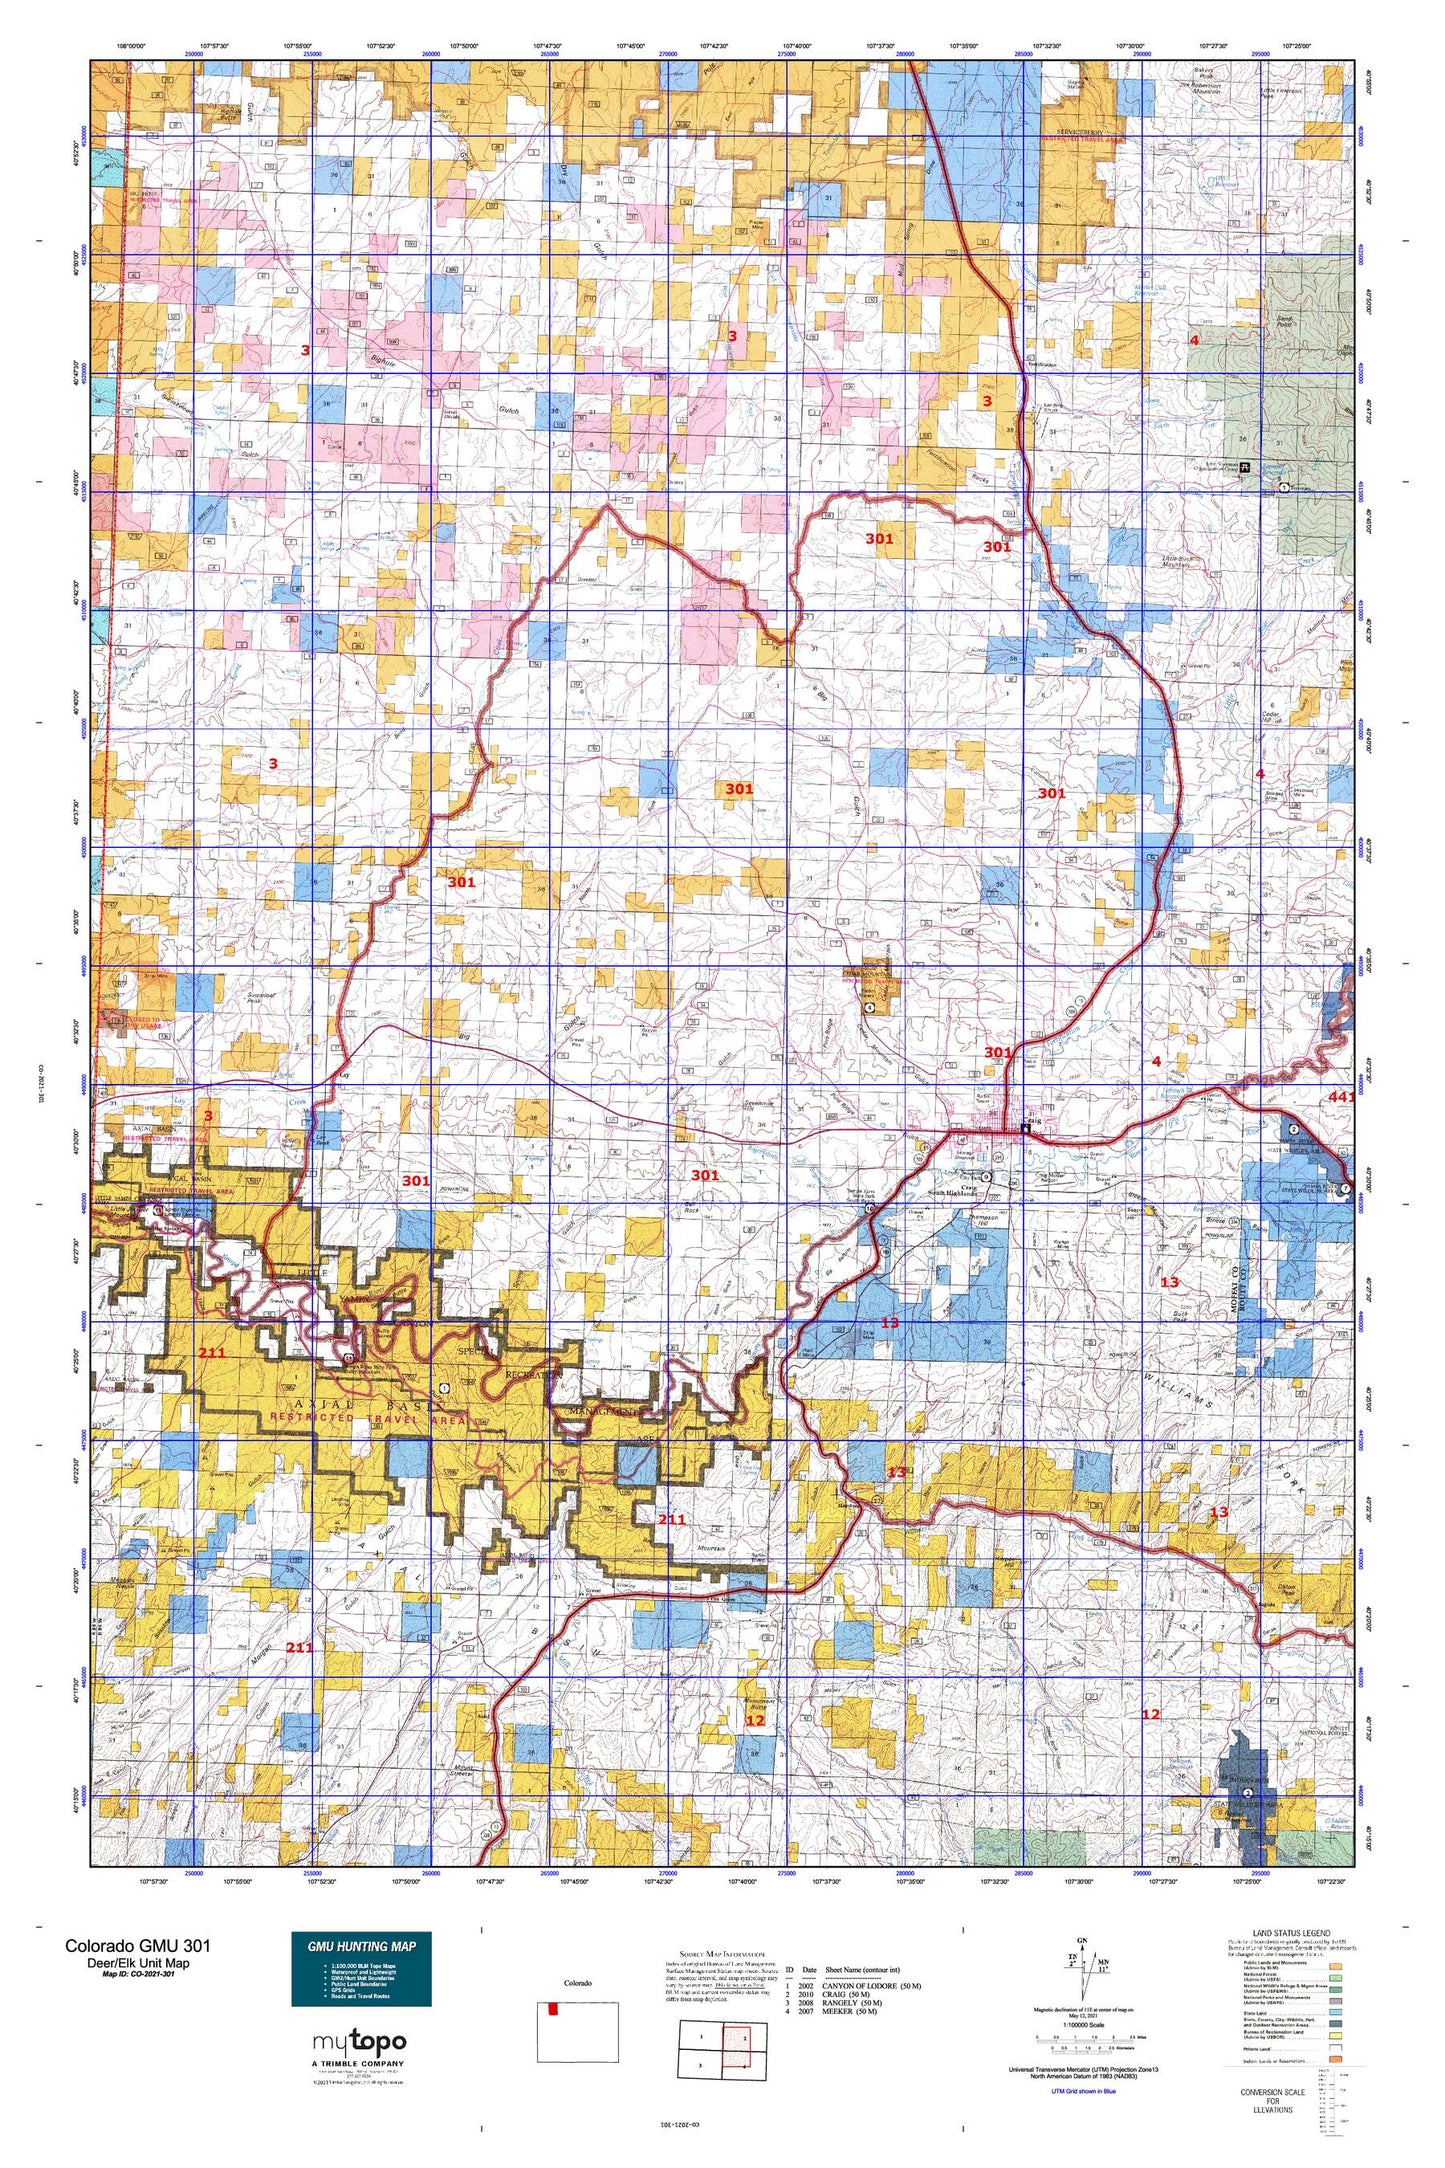 Colorado GMU 301 Map Image